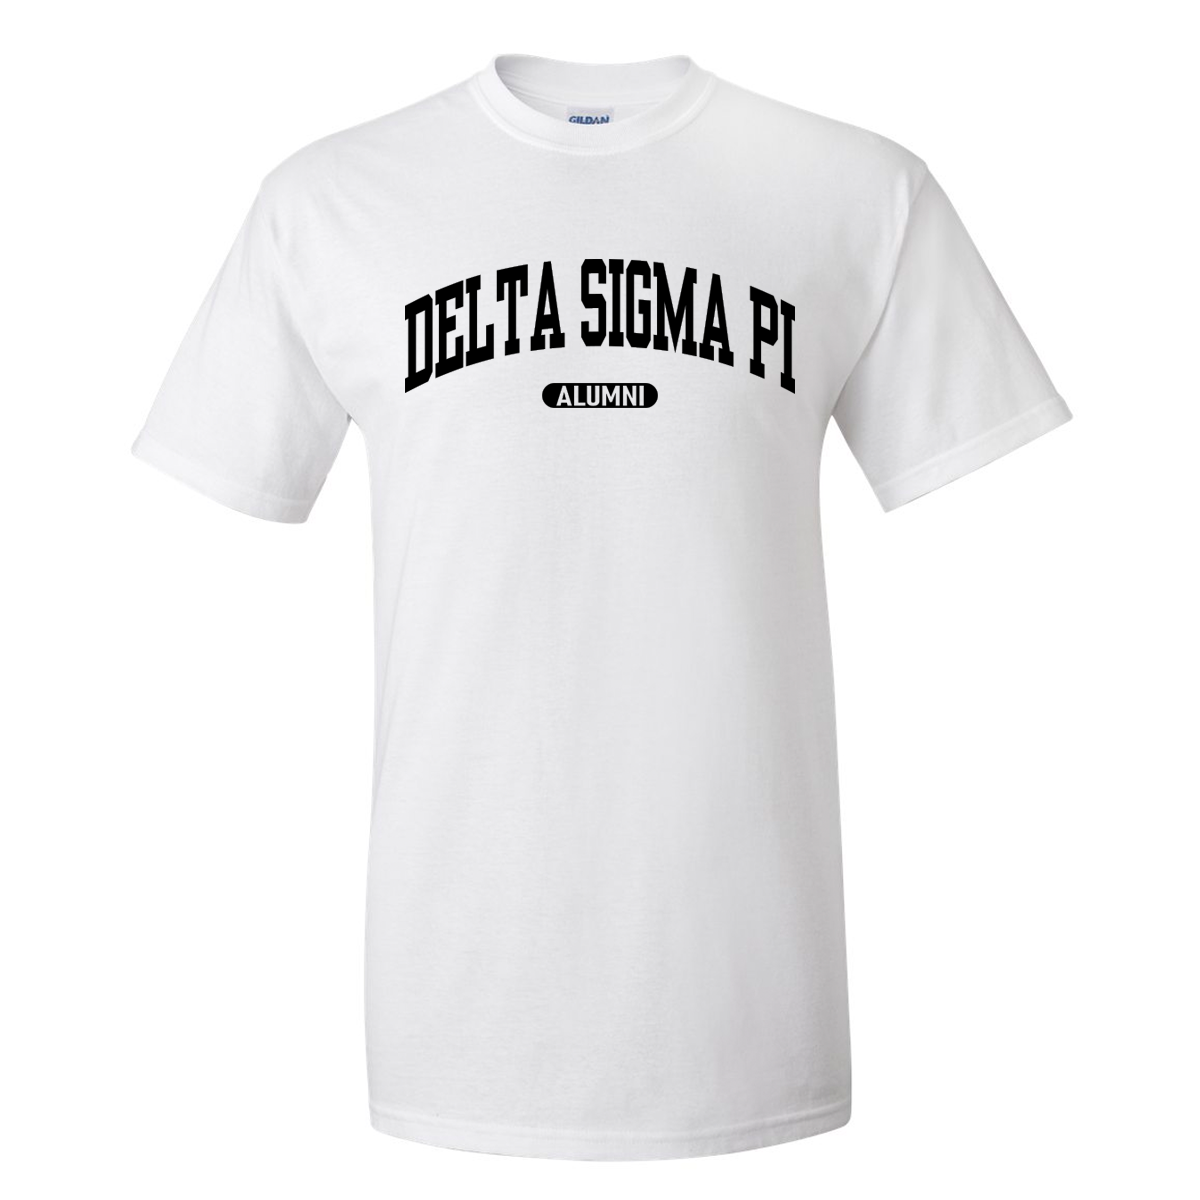 Delta Sigma Pi Vertical Alumni Printed Design